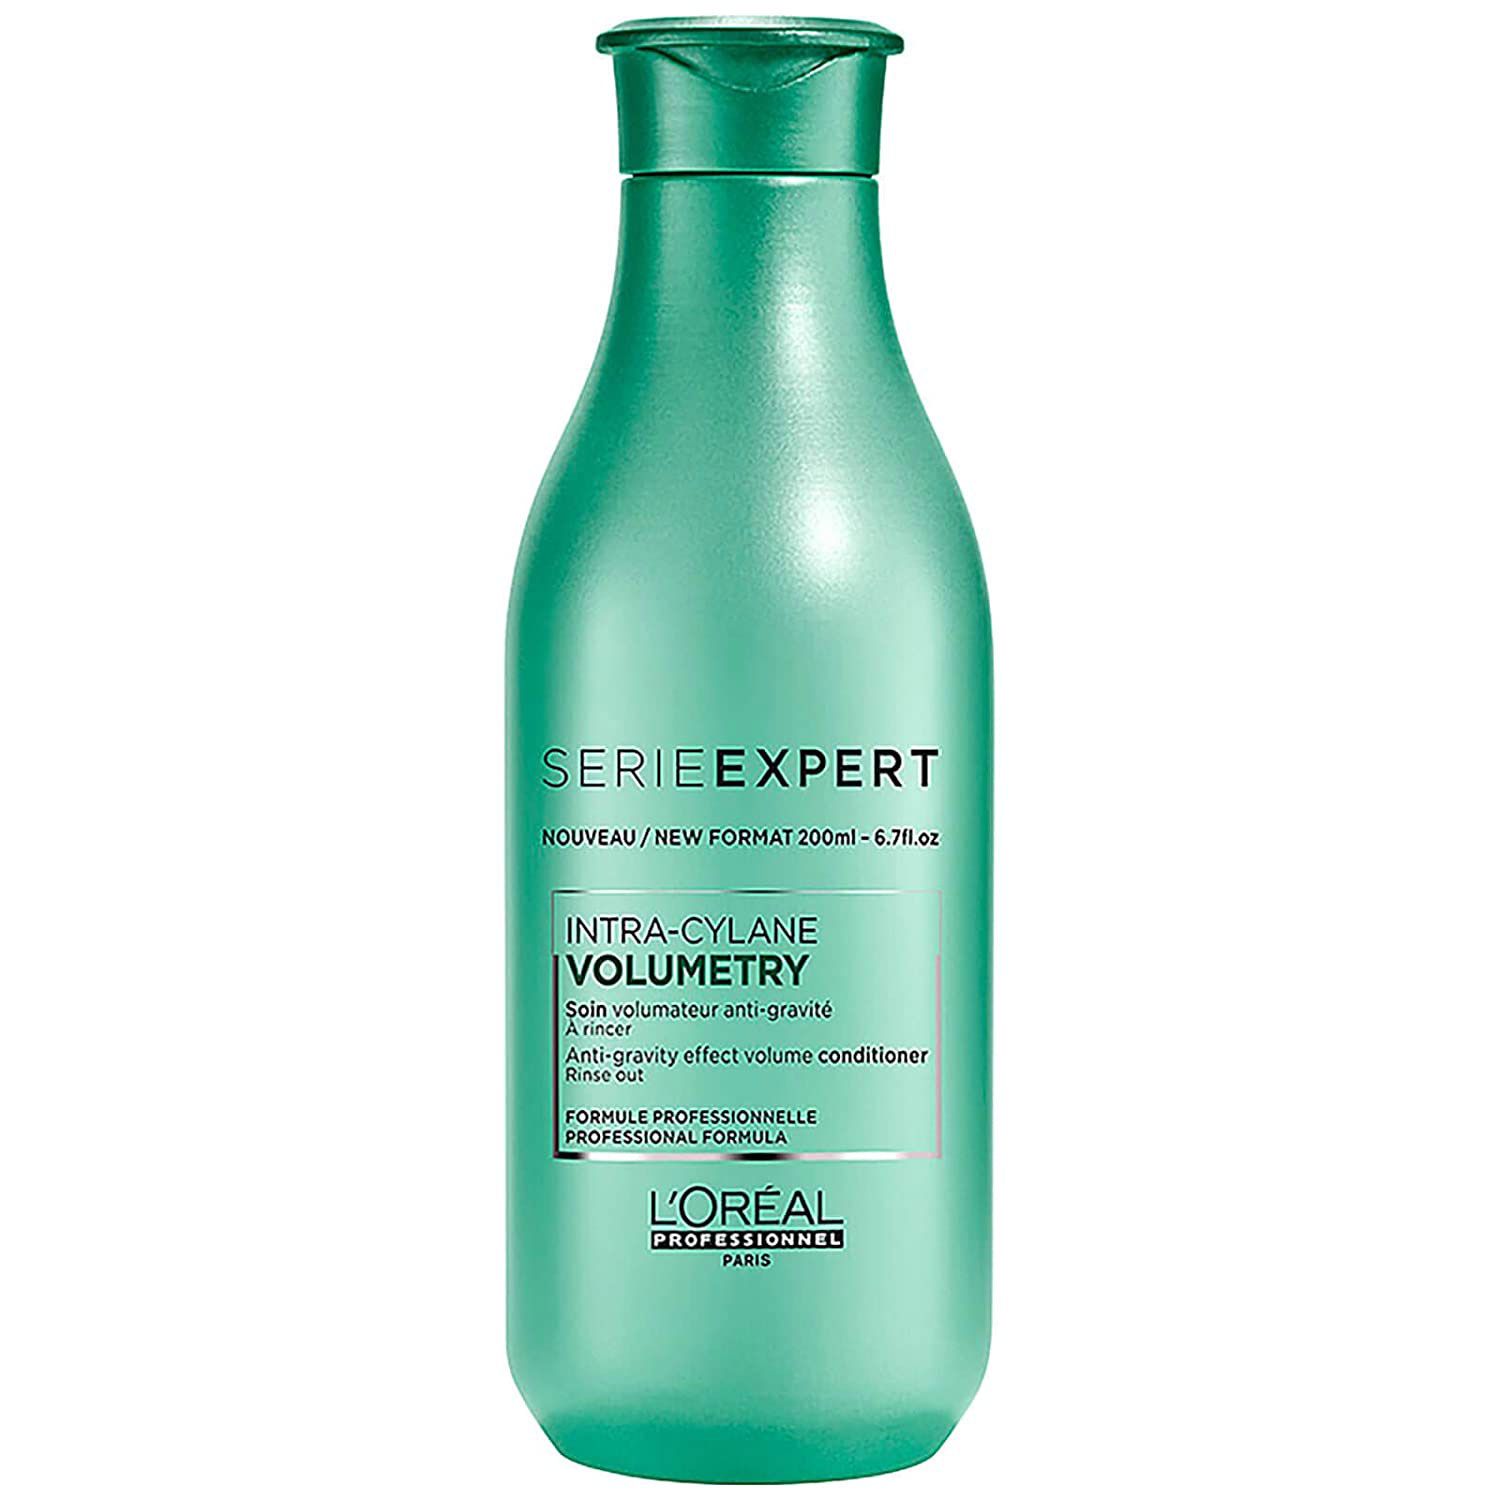 L'Oreal Intra-Cyclane Volumetry Shampoo